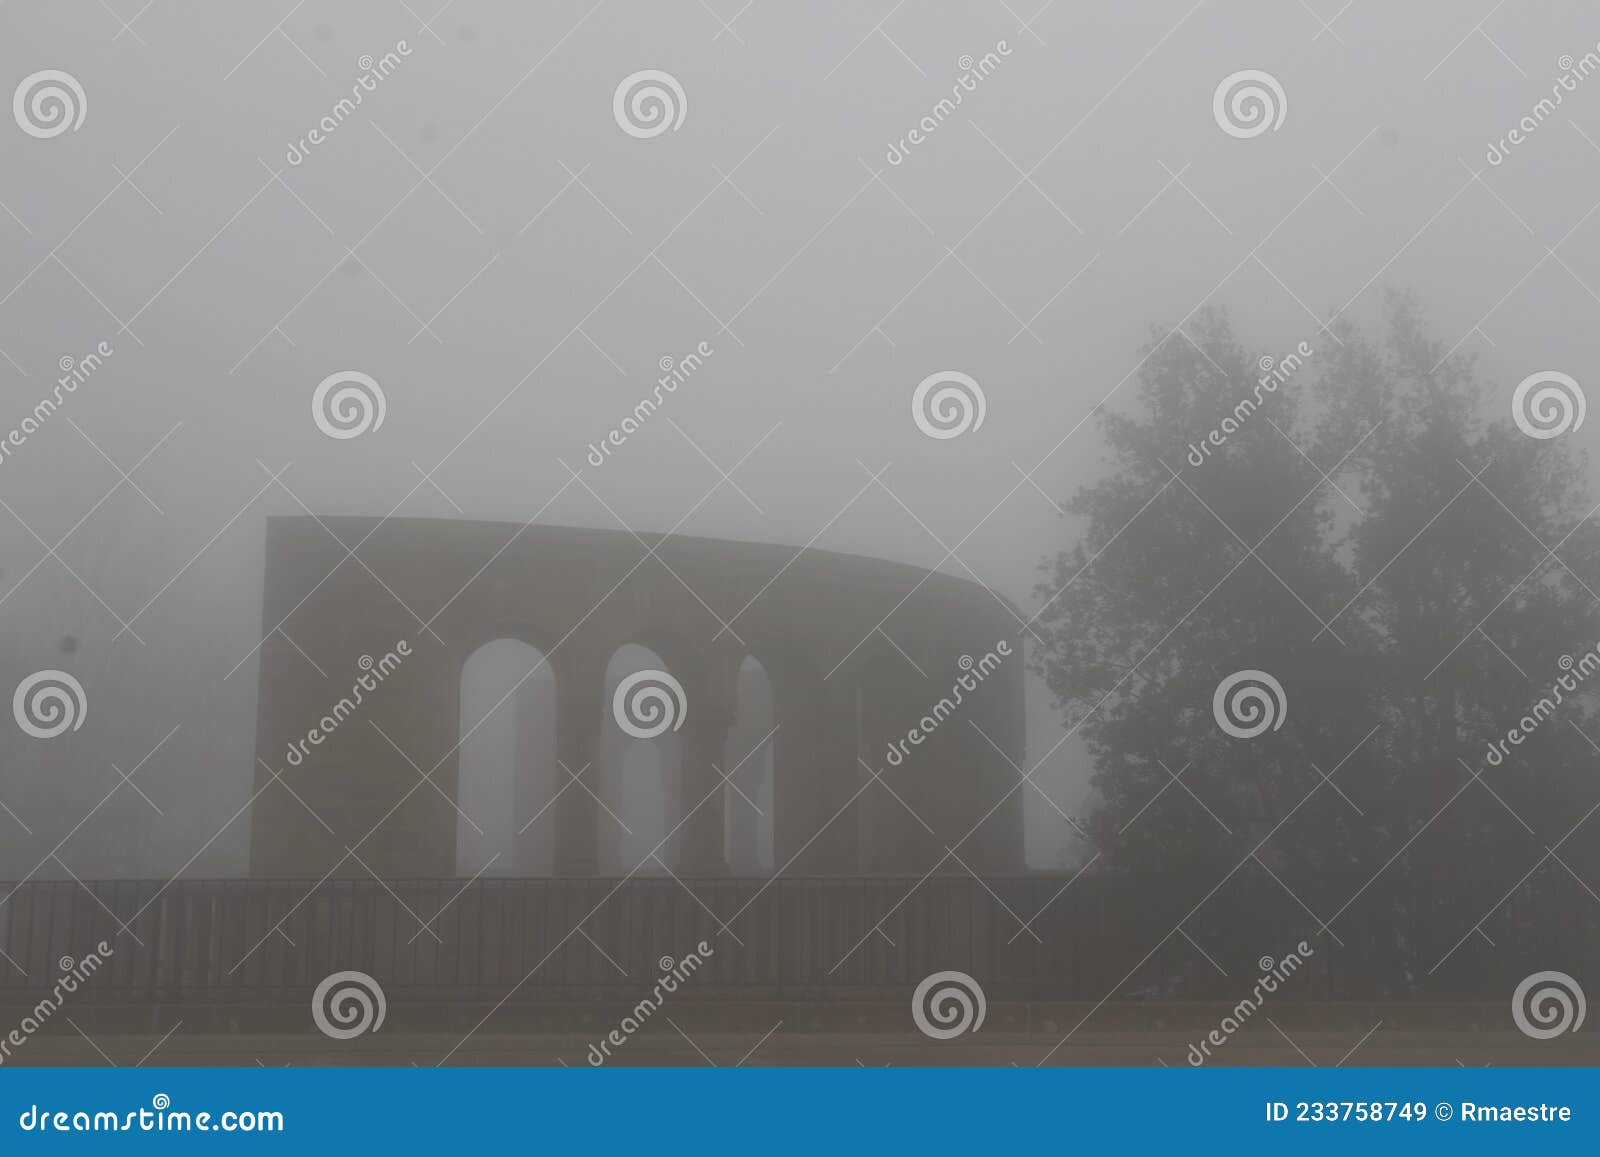 montserrat monastery in foggy winter photos of the exteriors